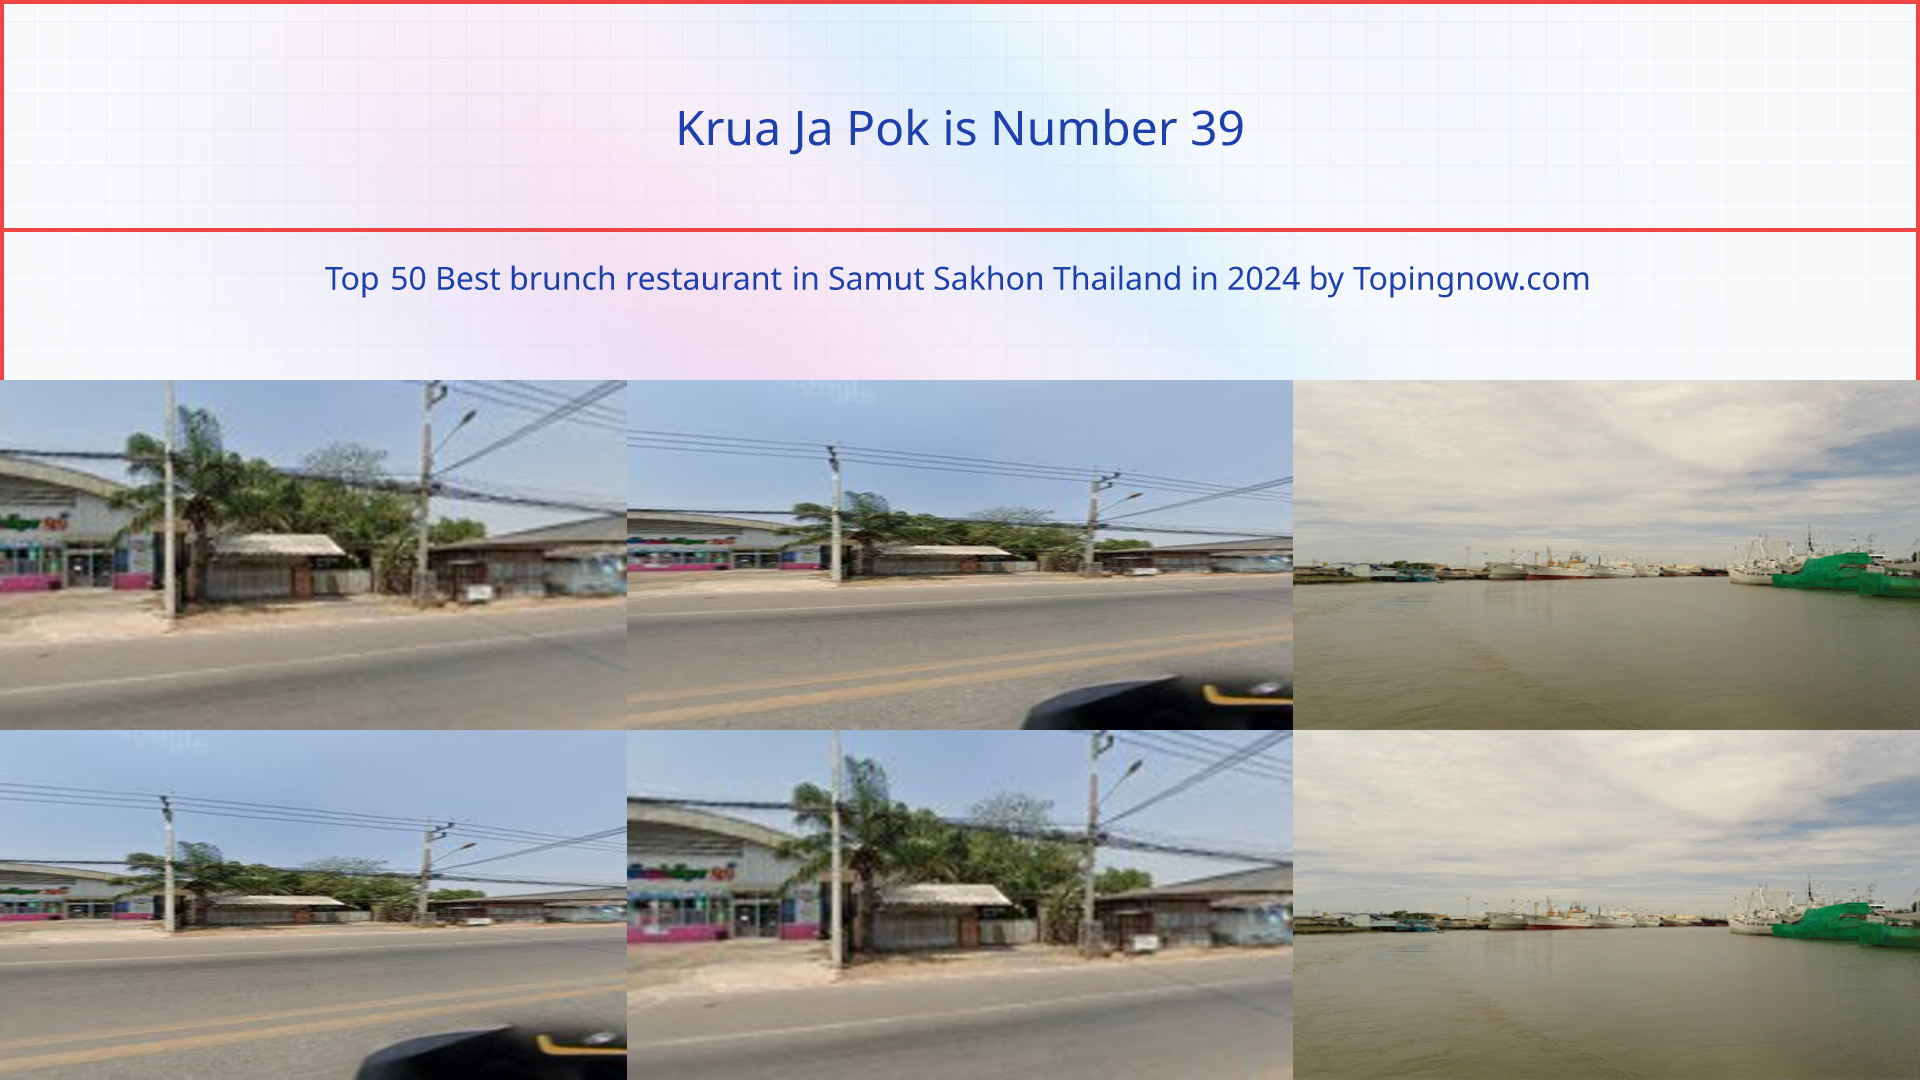 Krua Ja Pok: Top 50 Best brunch restaurant in Samut Sakhon Thailand in 2024